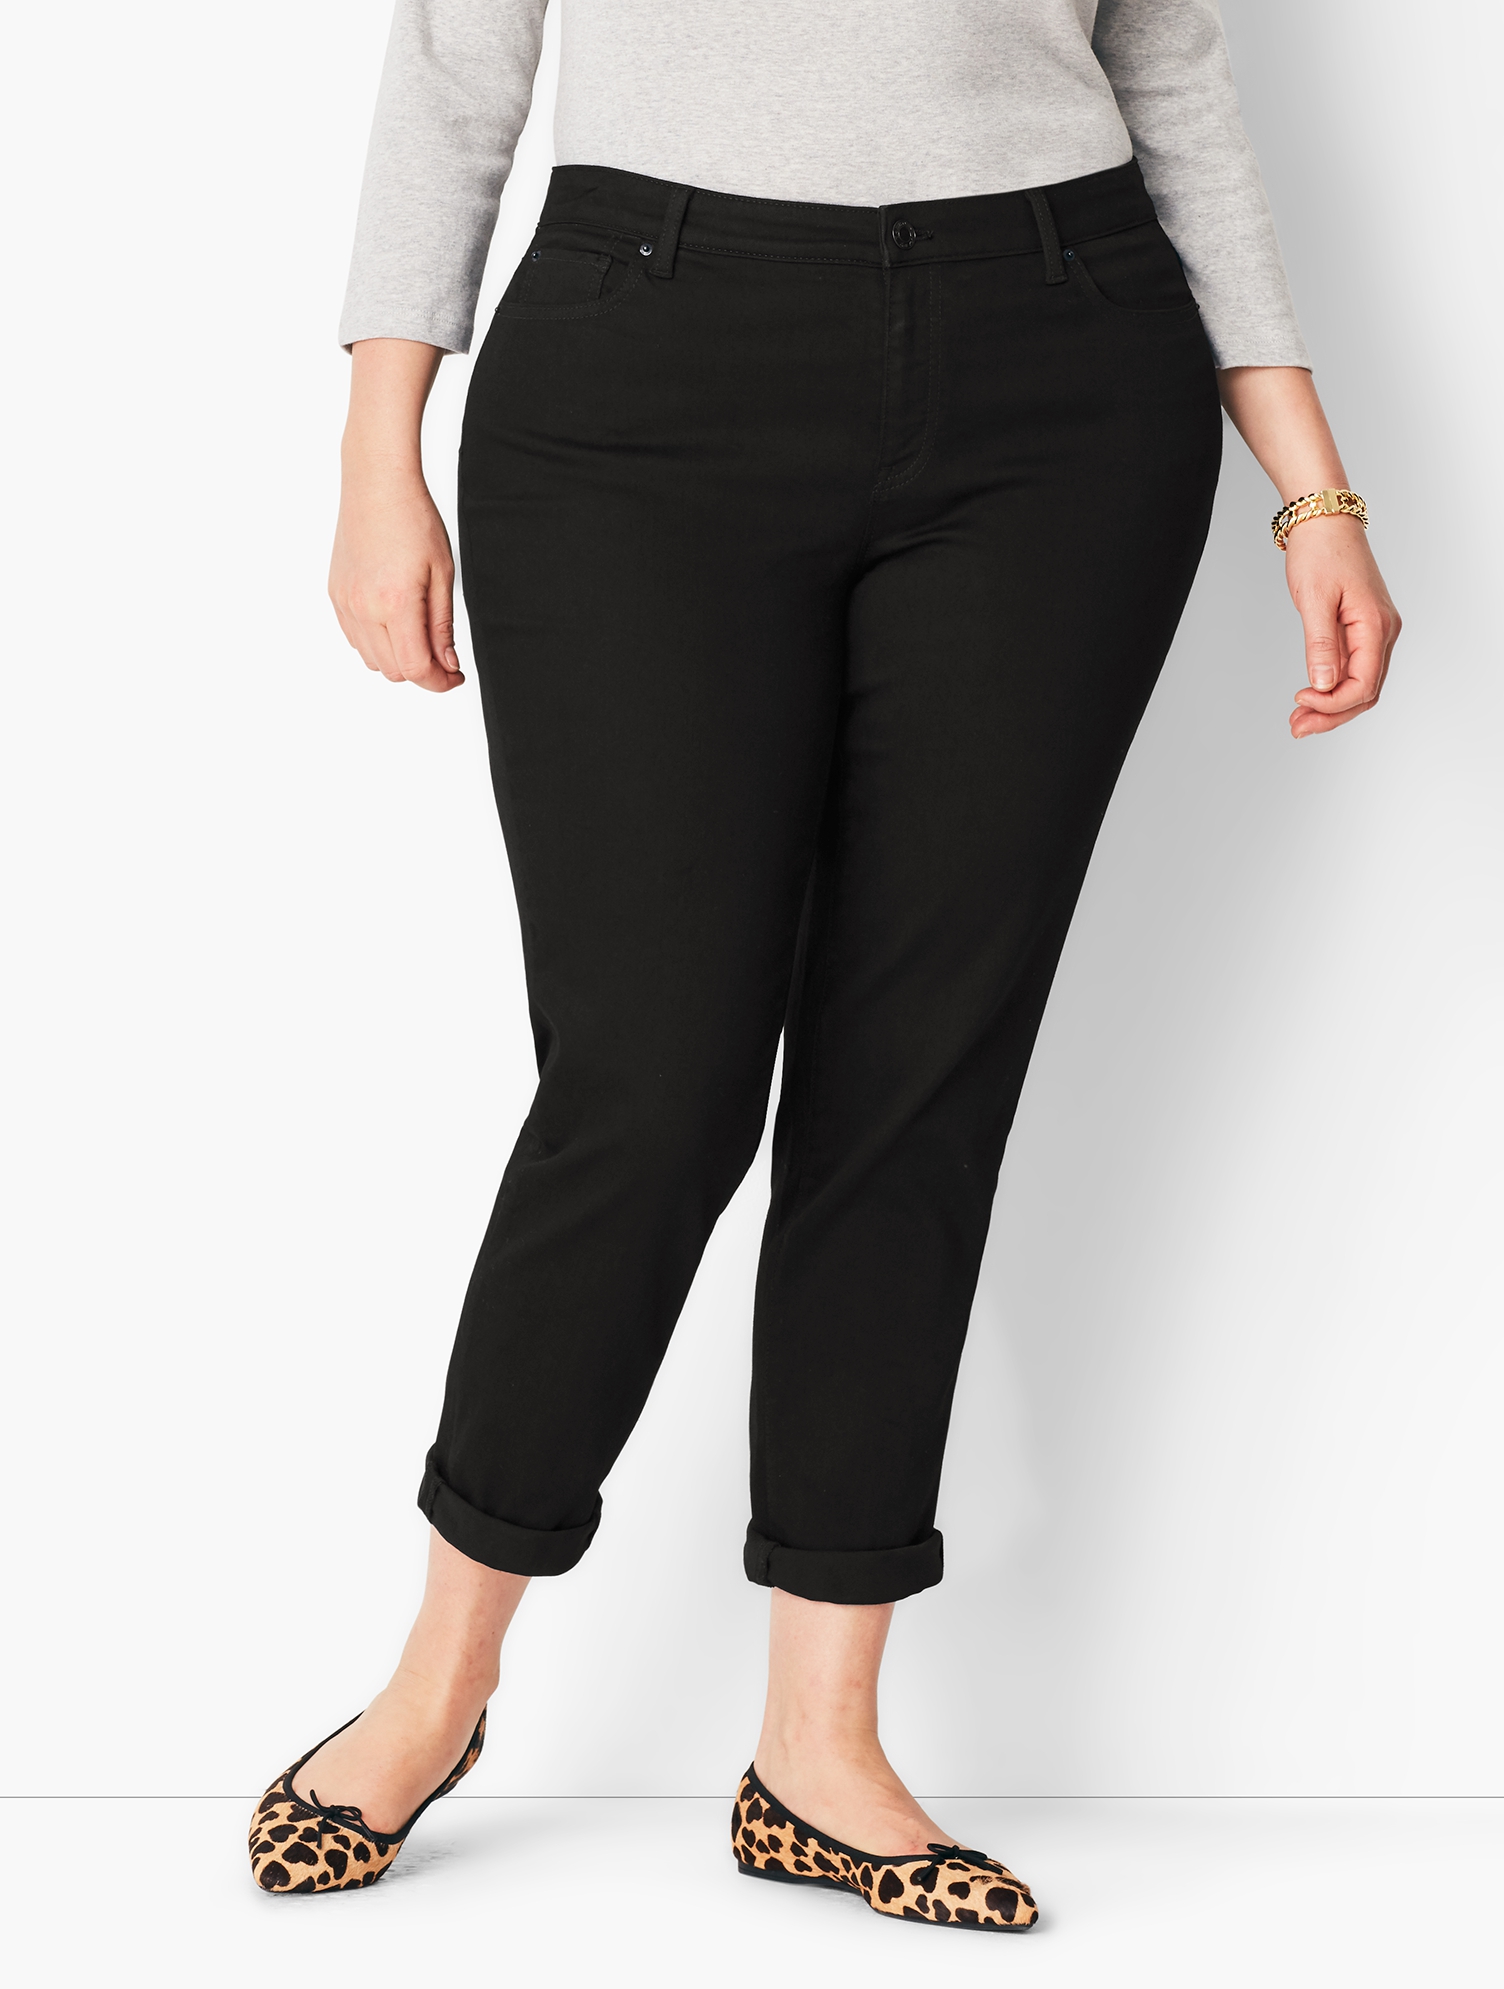 Talbots Plus Size Girlfriend Jeans - Black - Curvy Fit - 22